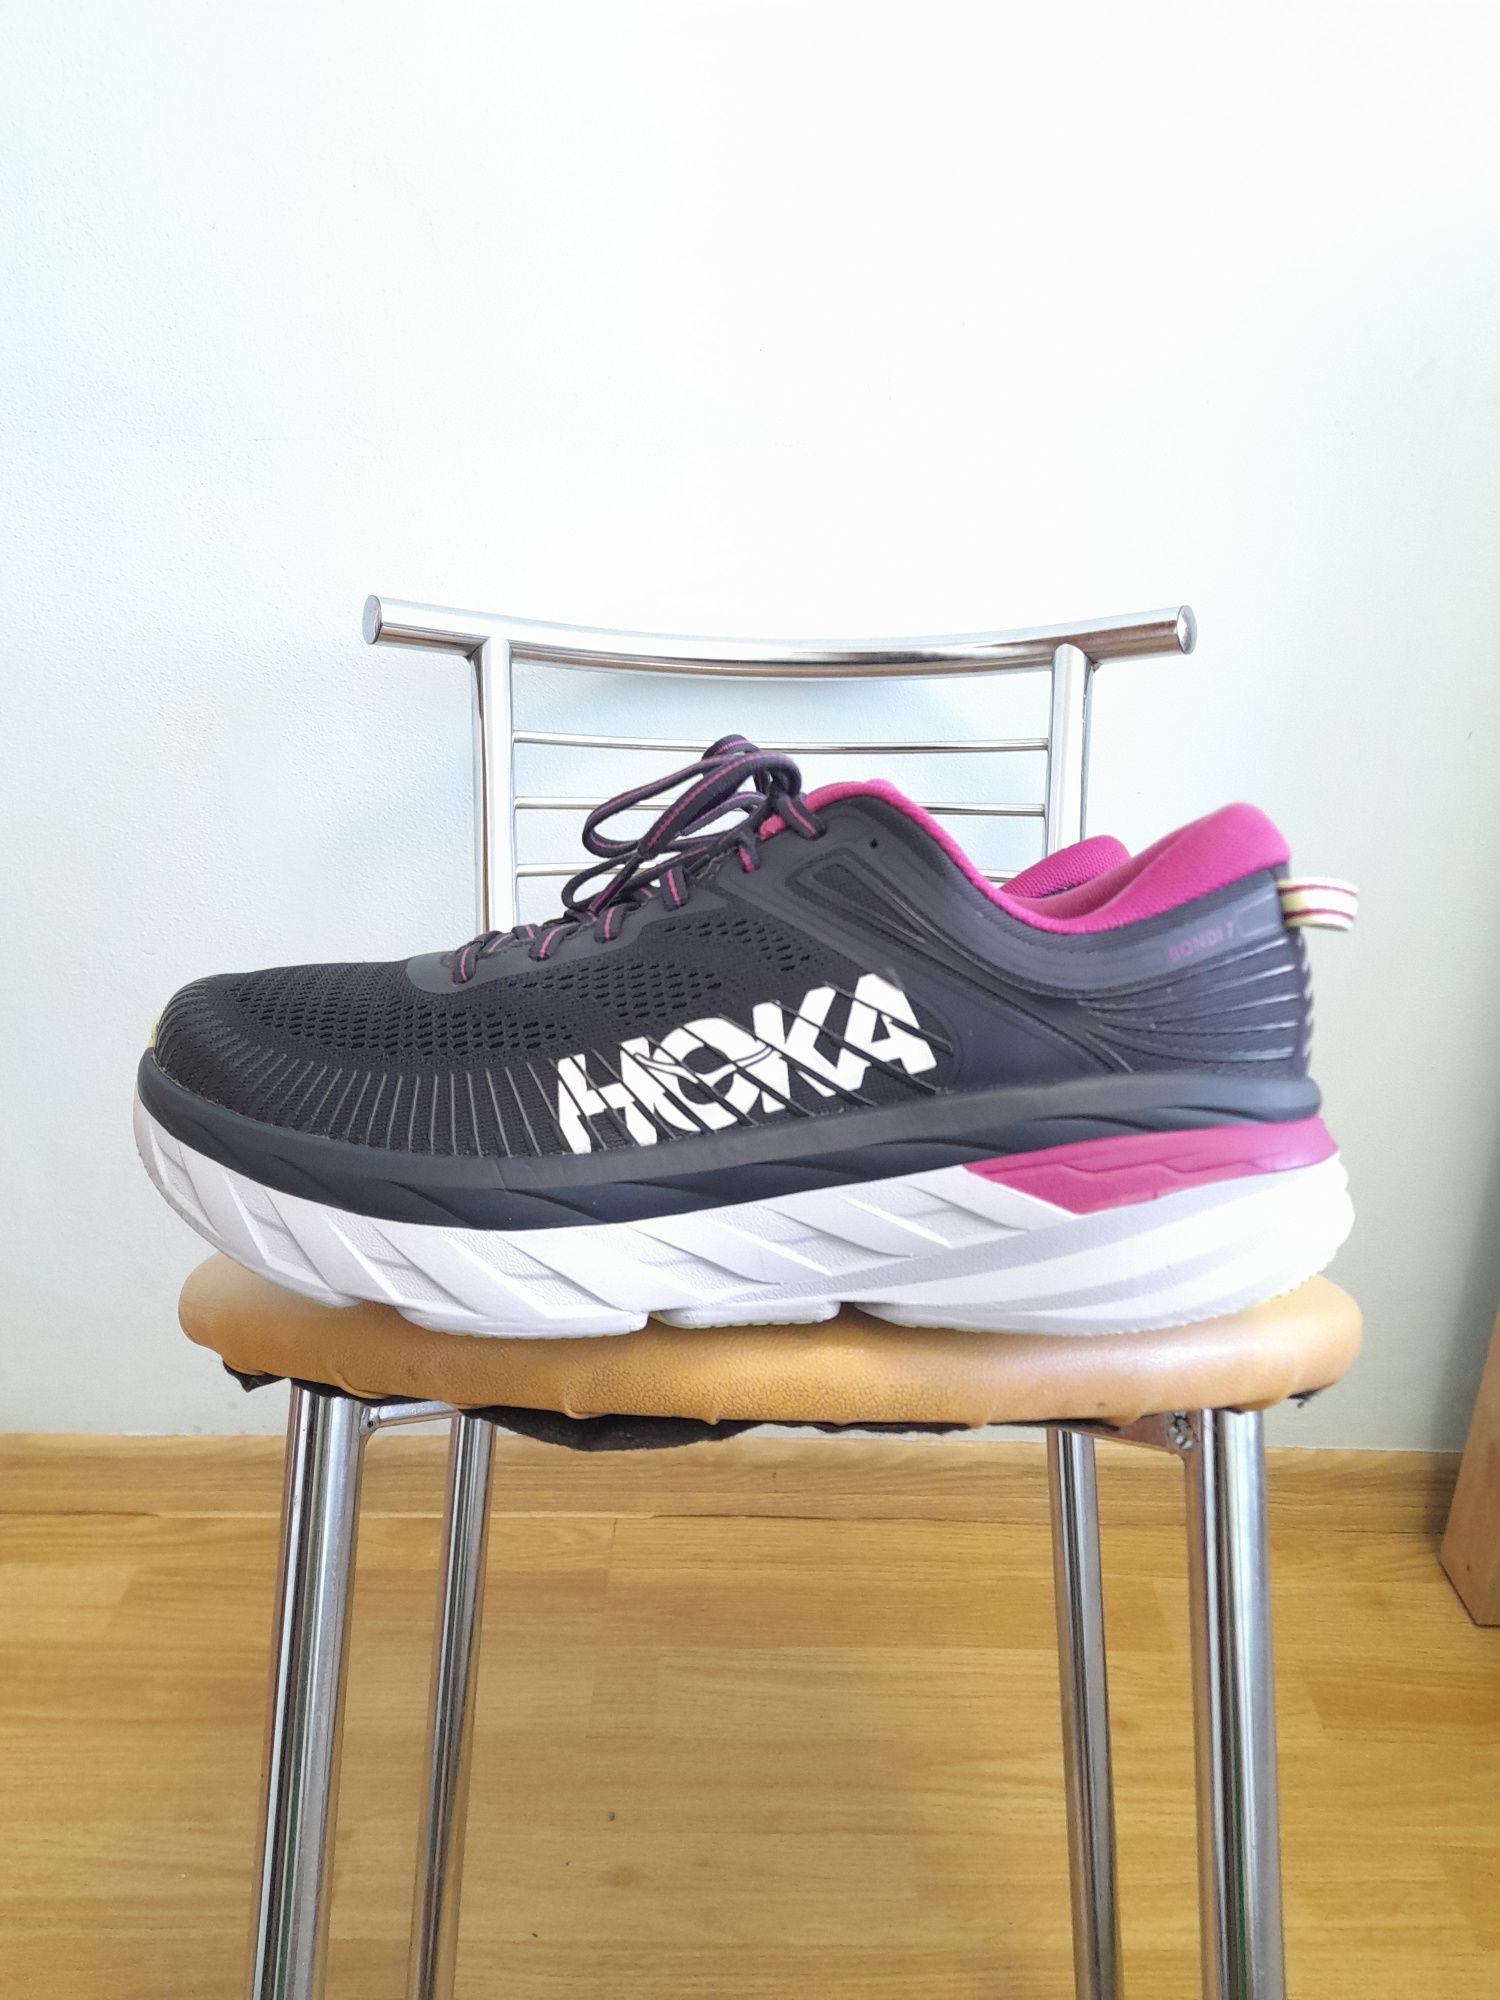 Hoka One One Bondi Pink Athletic Shoes for Women розмір 44 довж уст 28